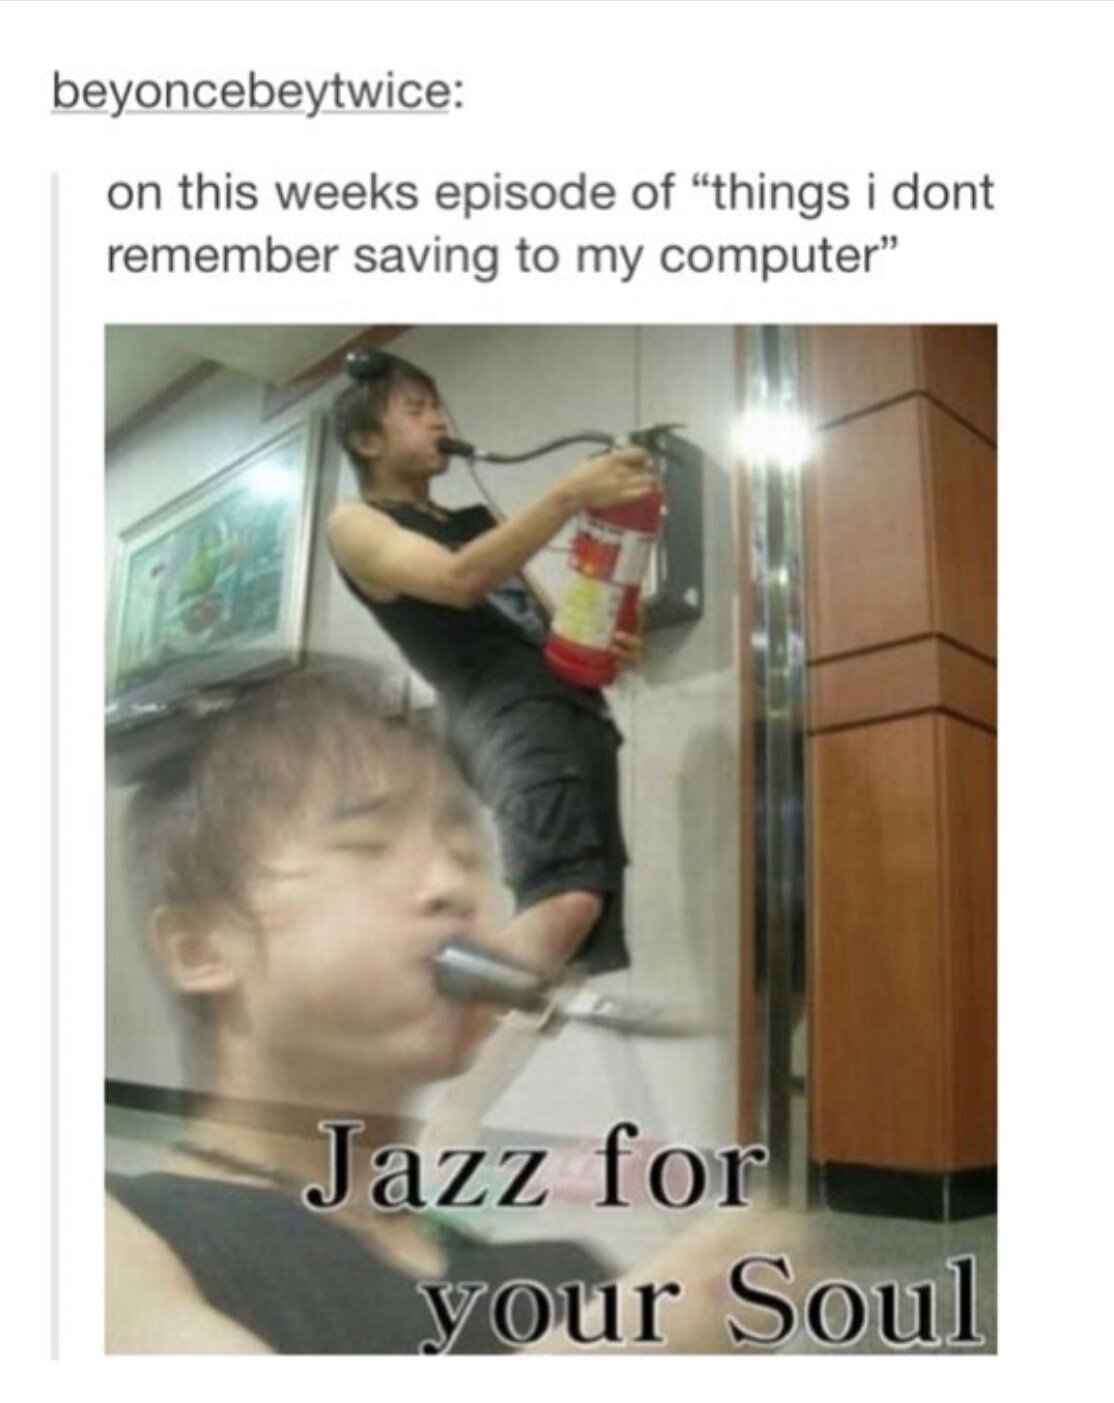 Jazz for your soul - meme